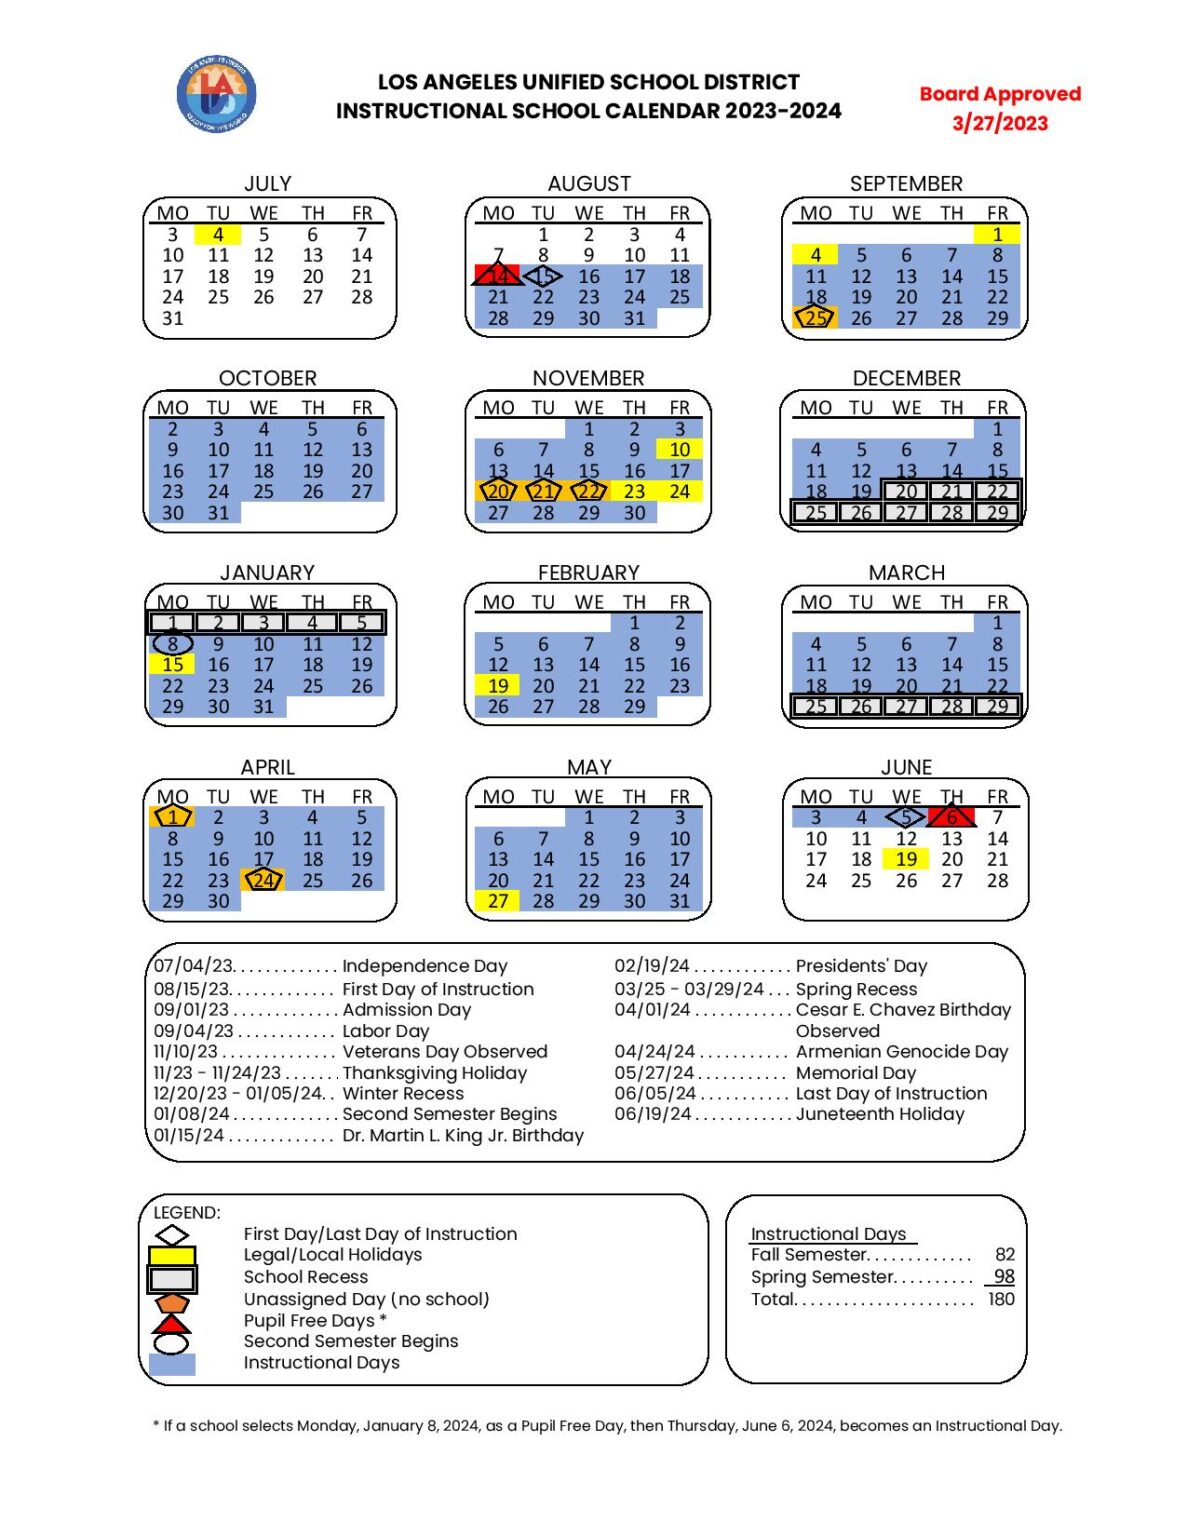 Los Angeles Unified School District Calendar 20232024 (LAUSD)